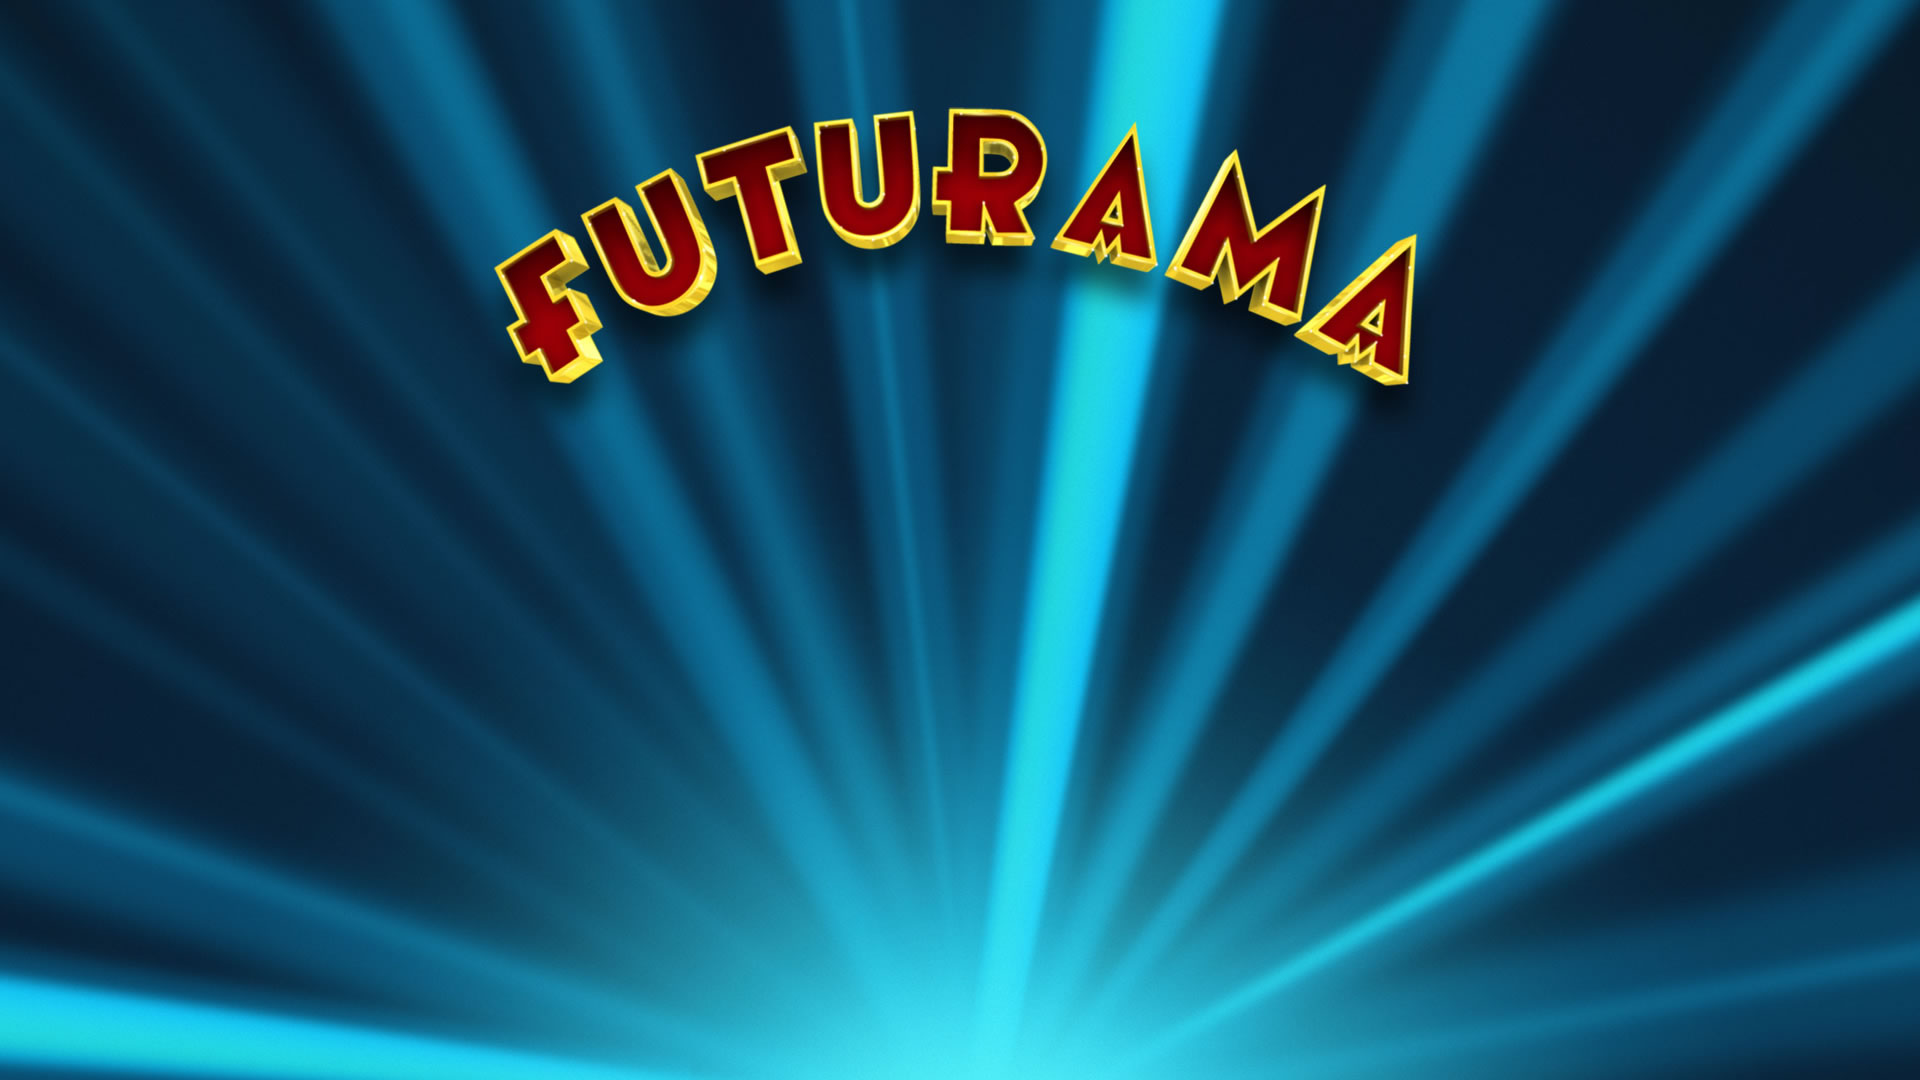 Futurama Wallpaper For iPhone